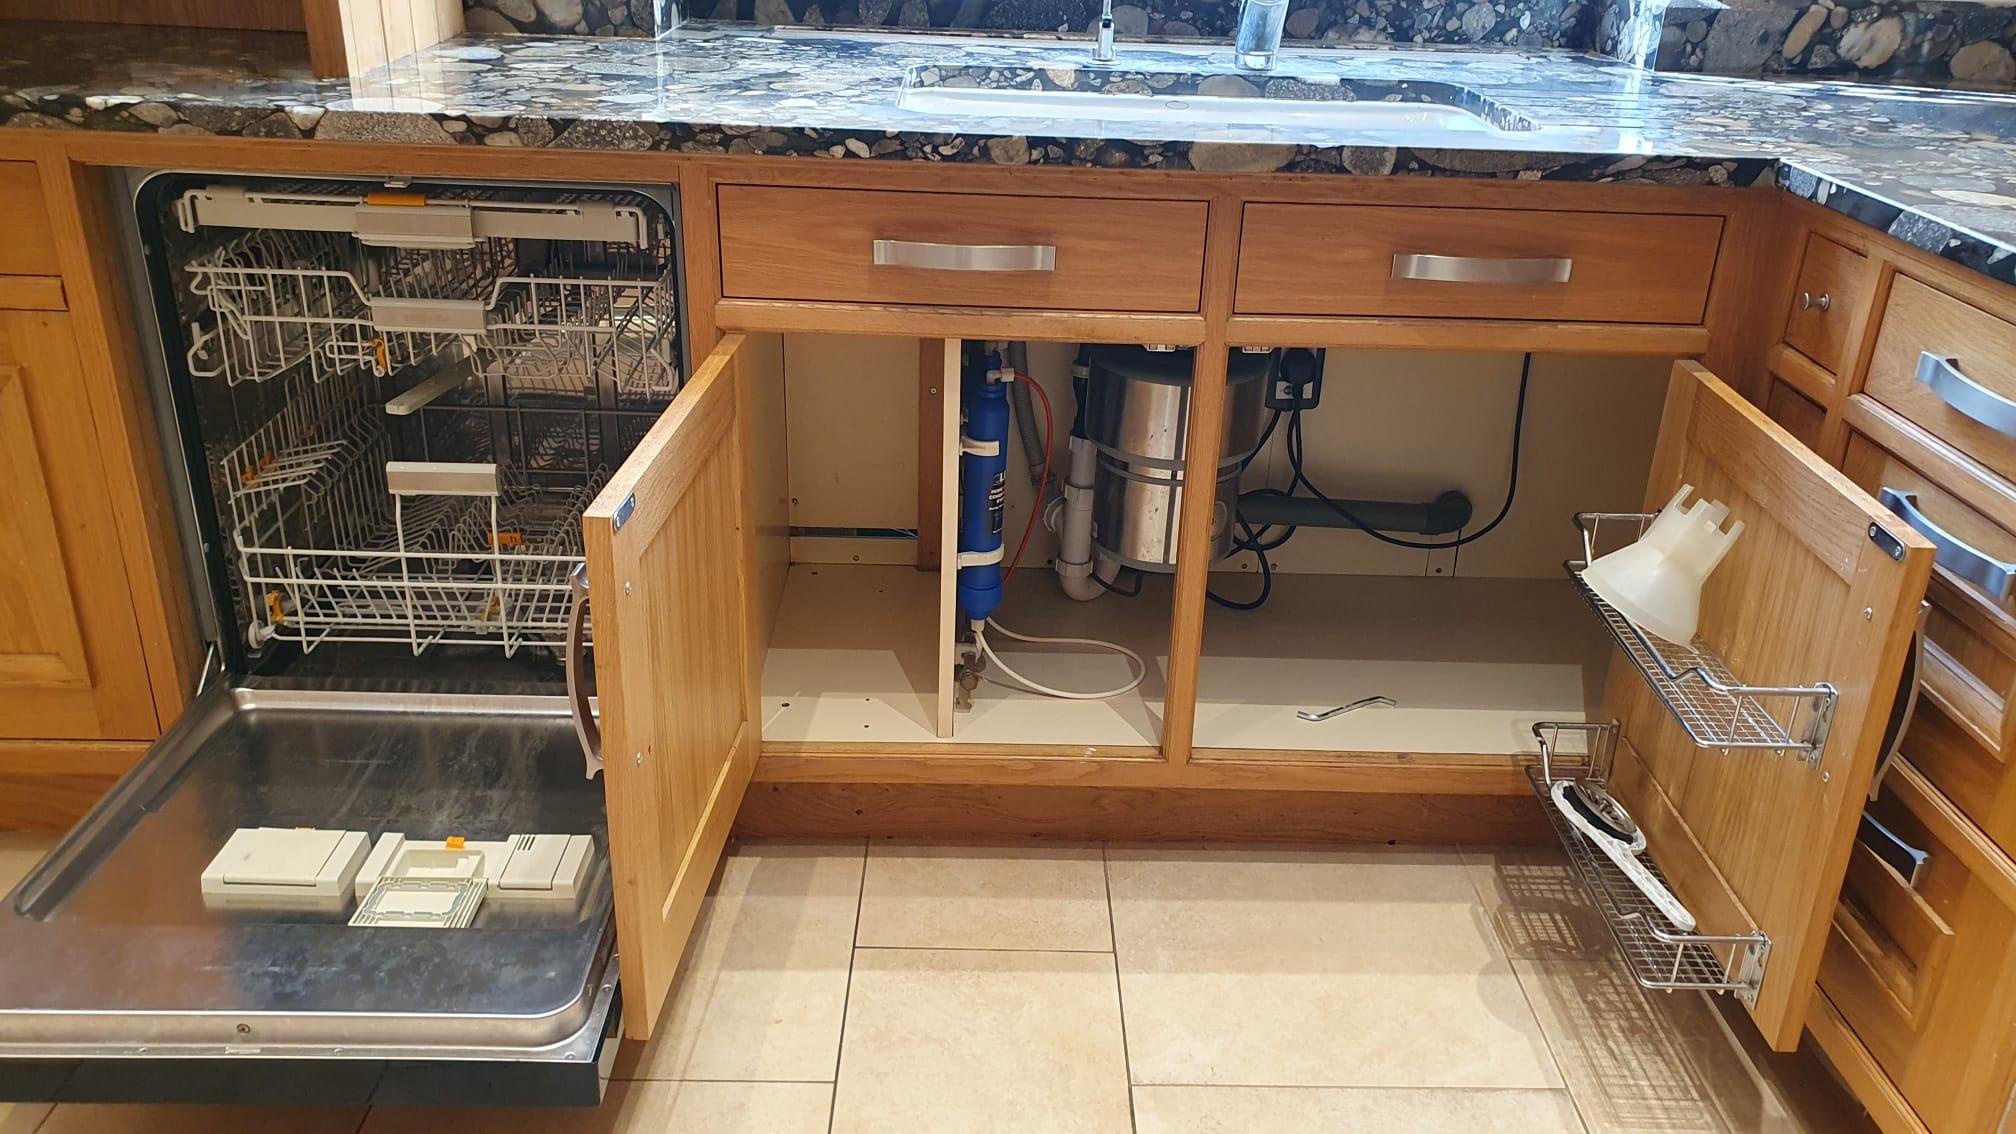 Side 1 Dishwasher & Under Sink